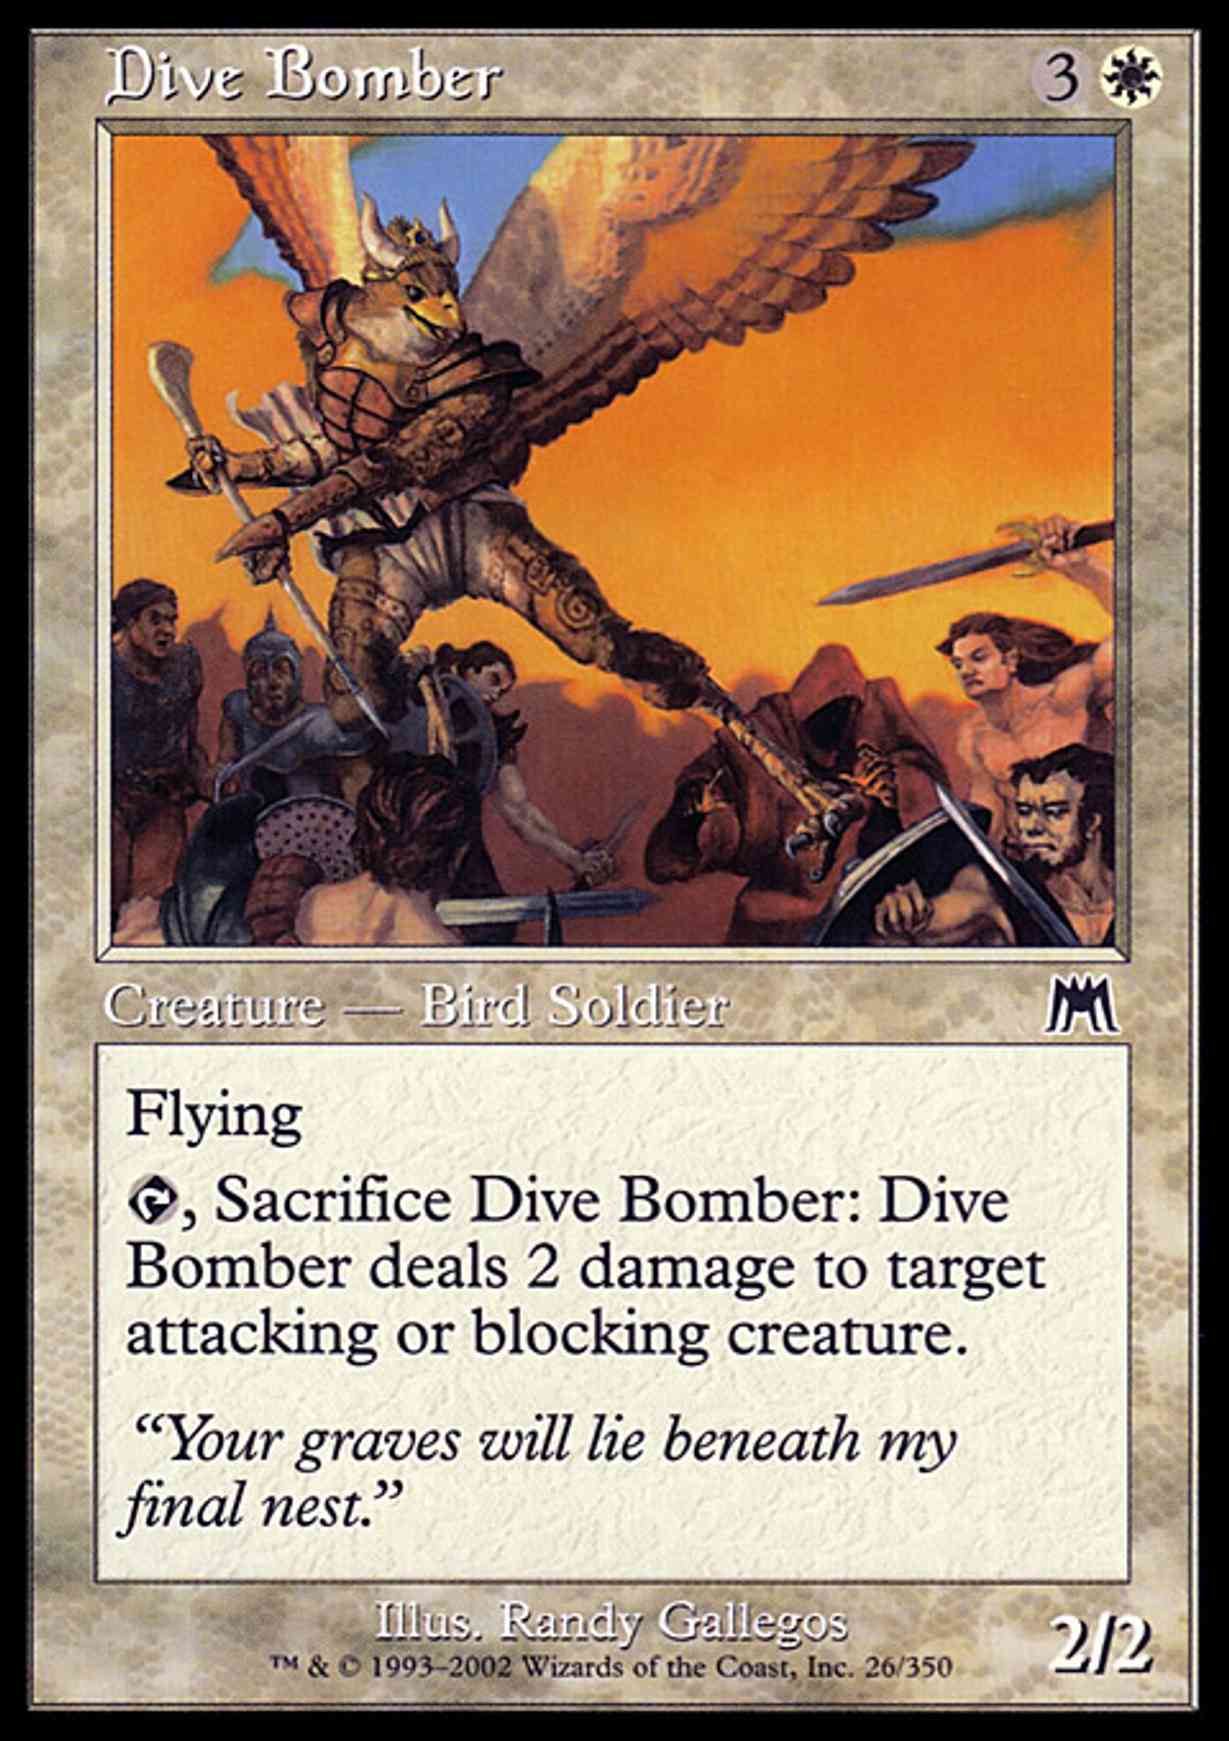 Dive Bomber magic card front